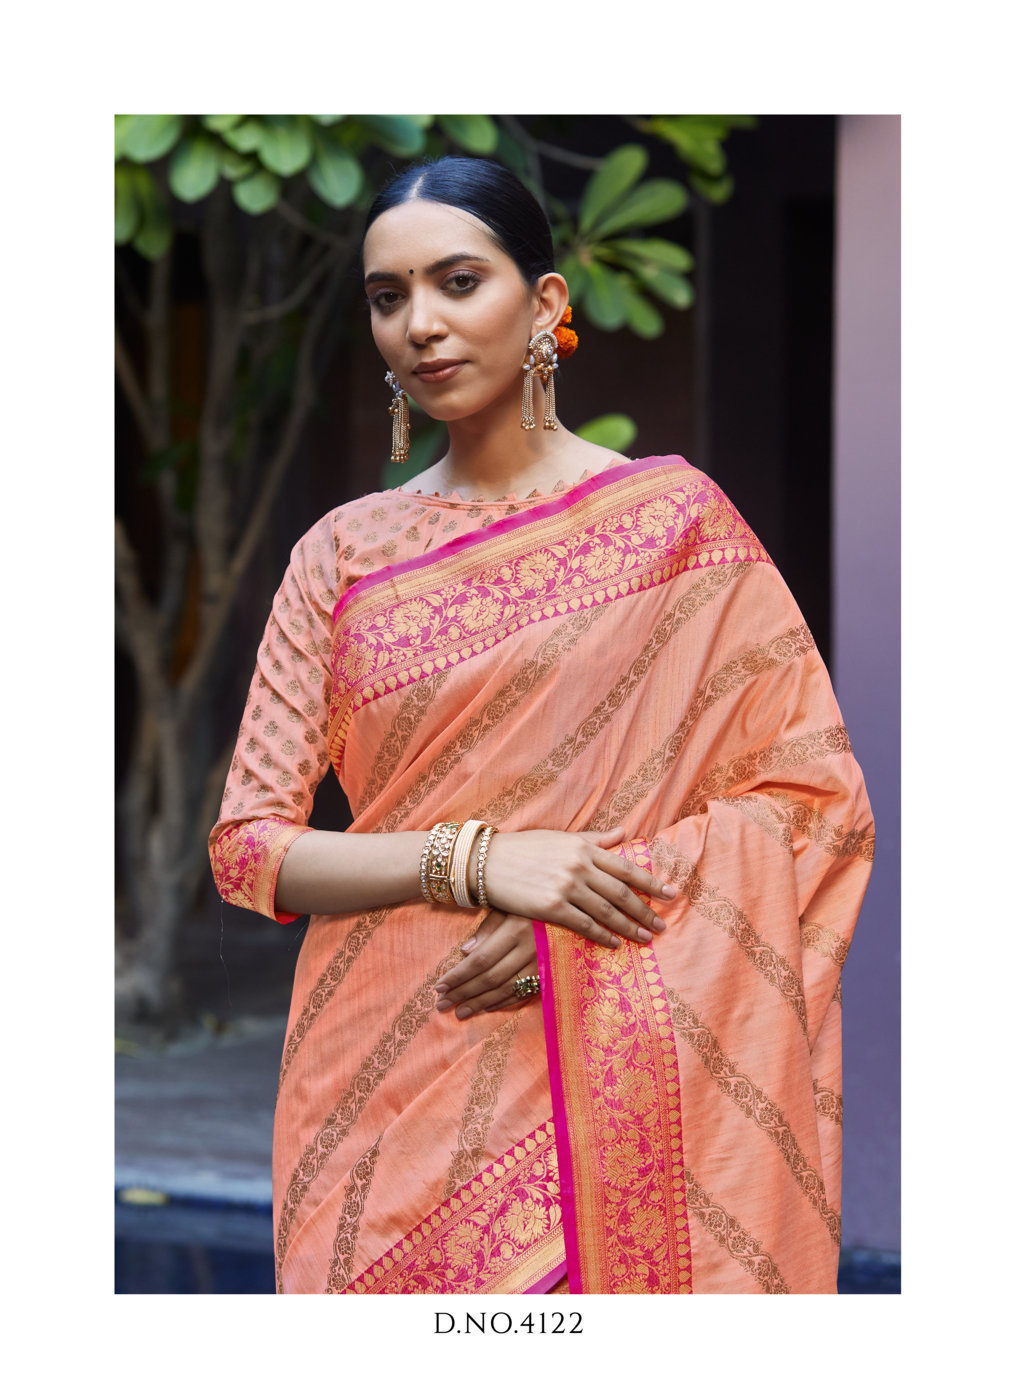 Sangam Presents Metallic Silk Designer Soft Silk Sarees